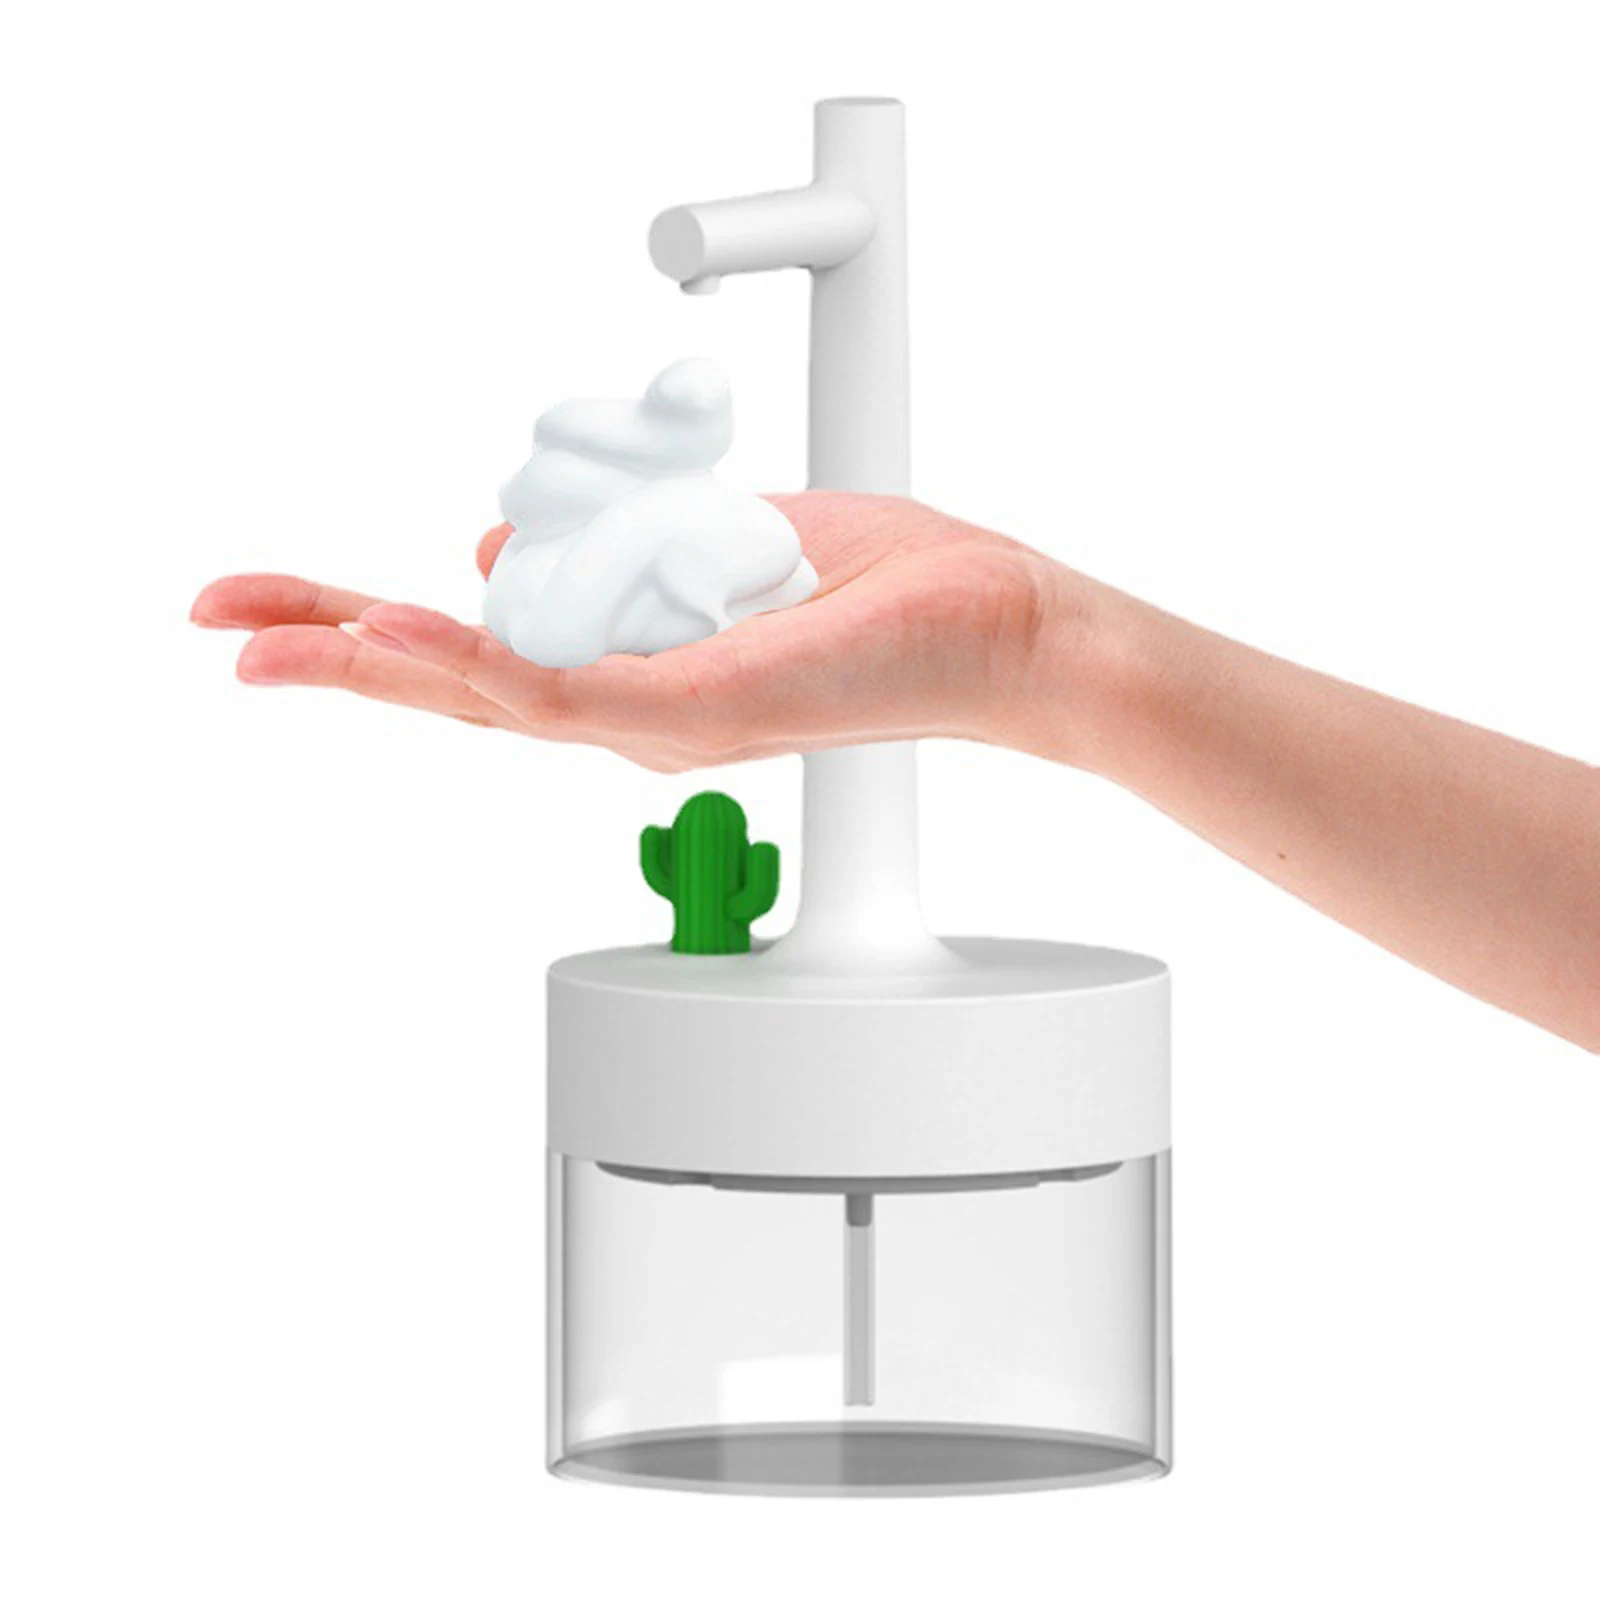 

350ML Automatic Soap Dispenser 350ml Touchless Foaming Soap Dispenser Infrared Sensor With Adjustable Foam Volume For Home